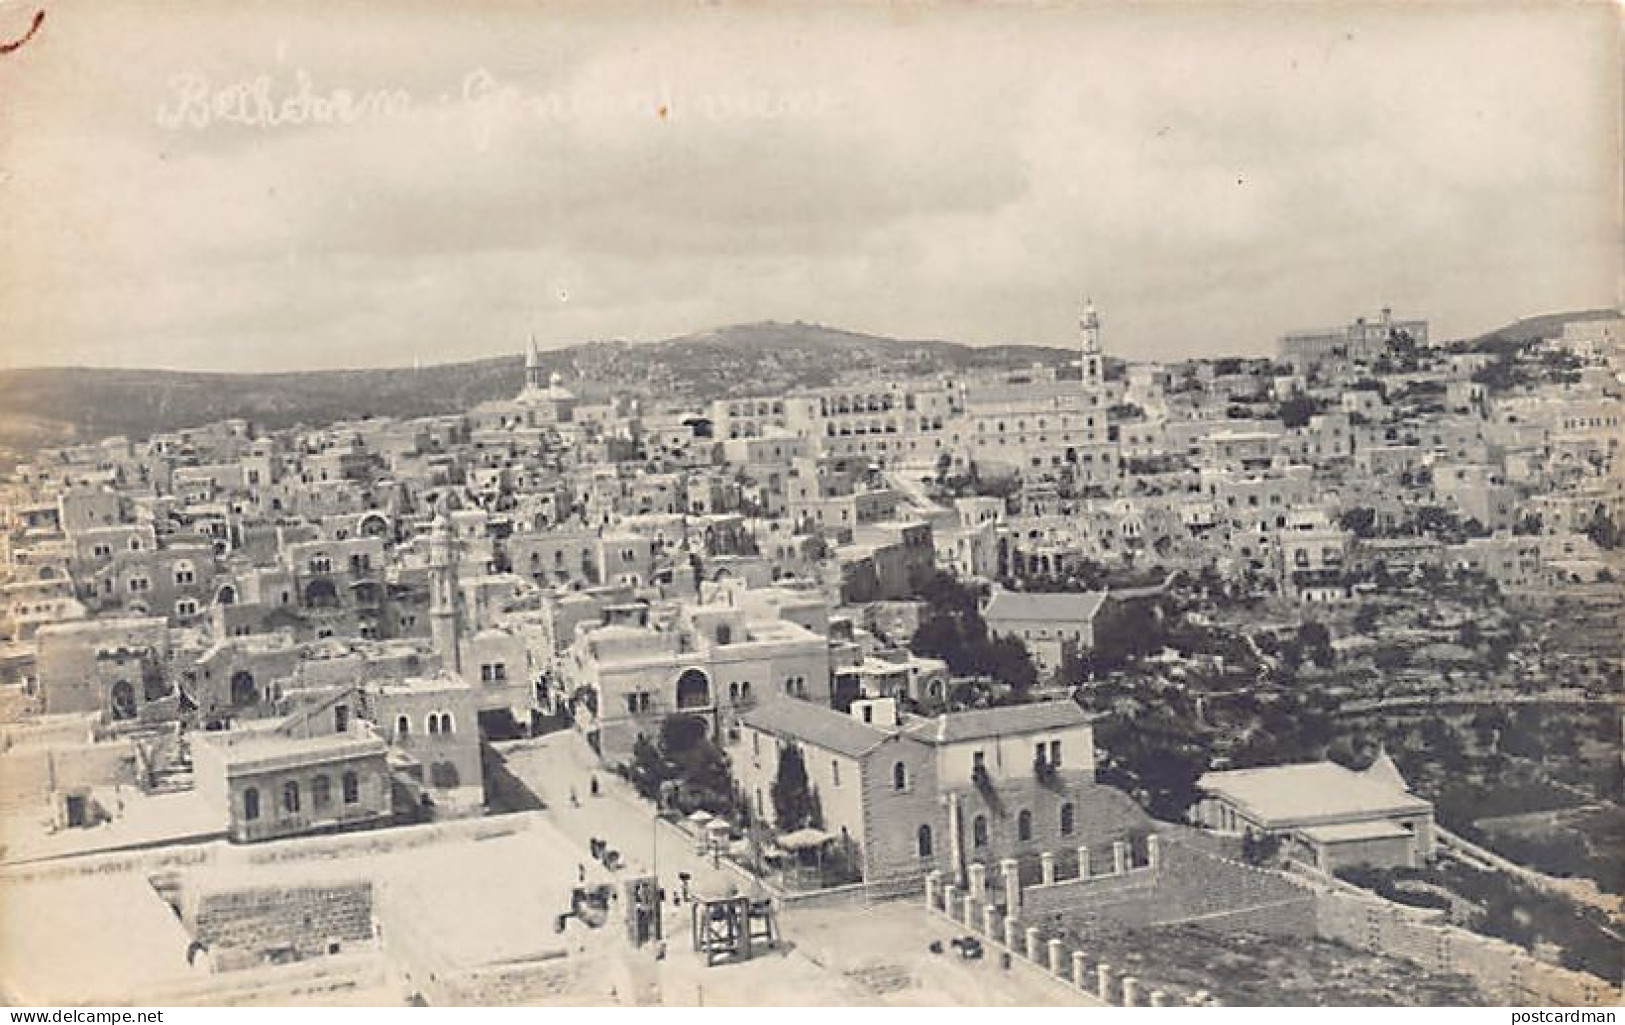 Palestine - BETHLEHEM - General View - REAL PHOTO - Publ. Unknwon  - Palästina